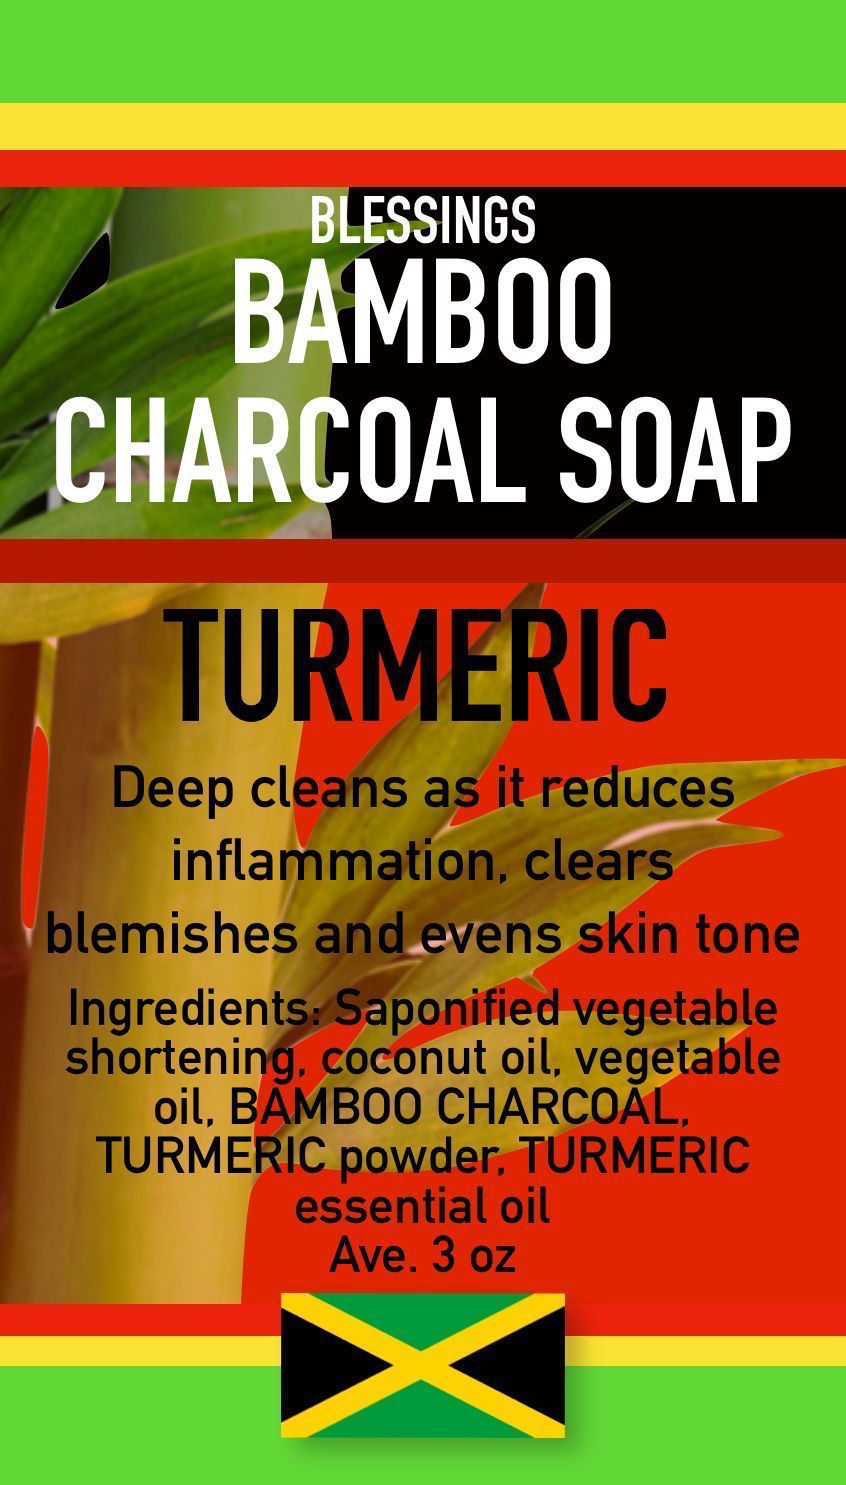 Bamboo Charcoal Turmeric Soap